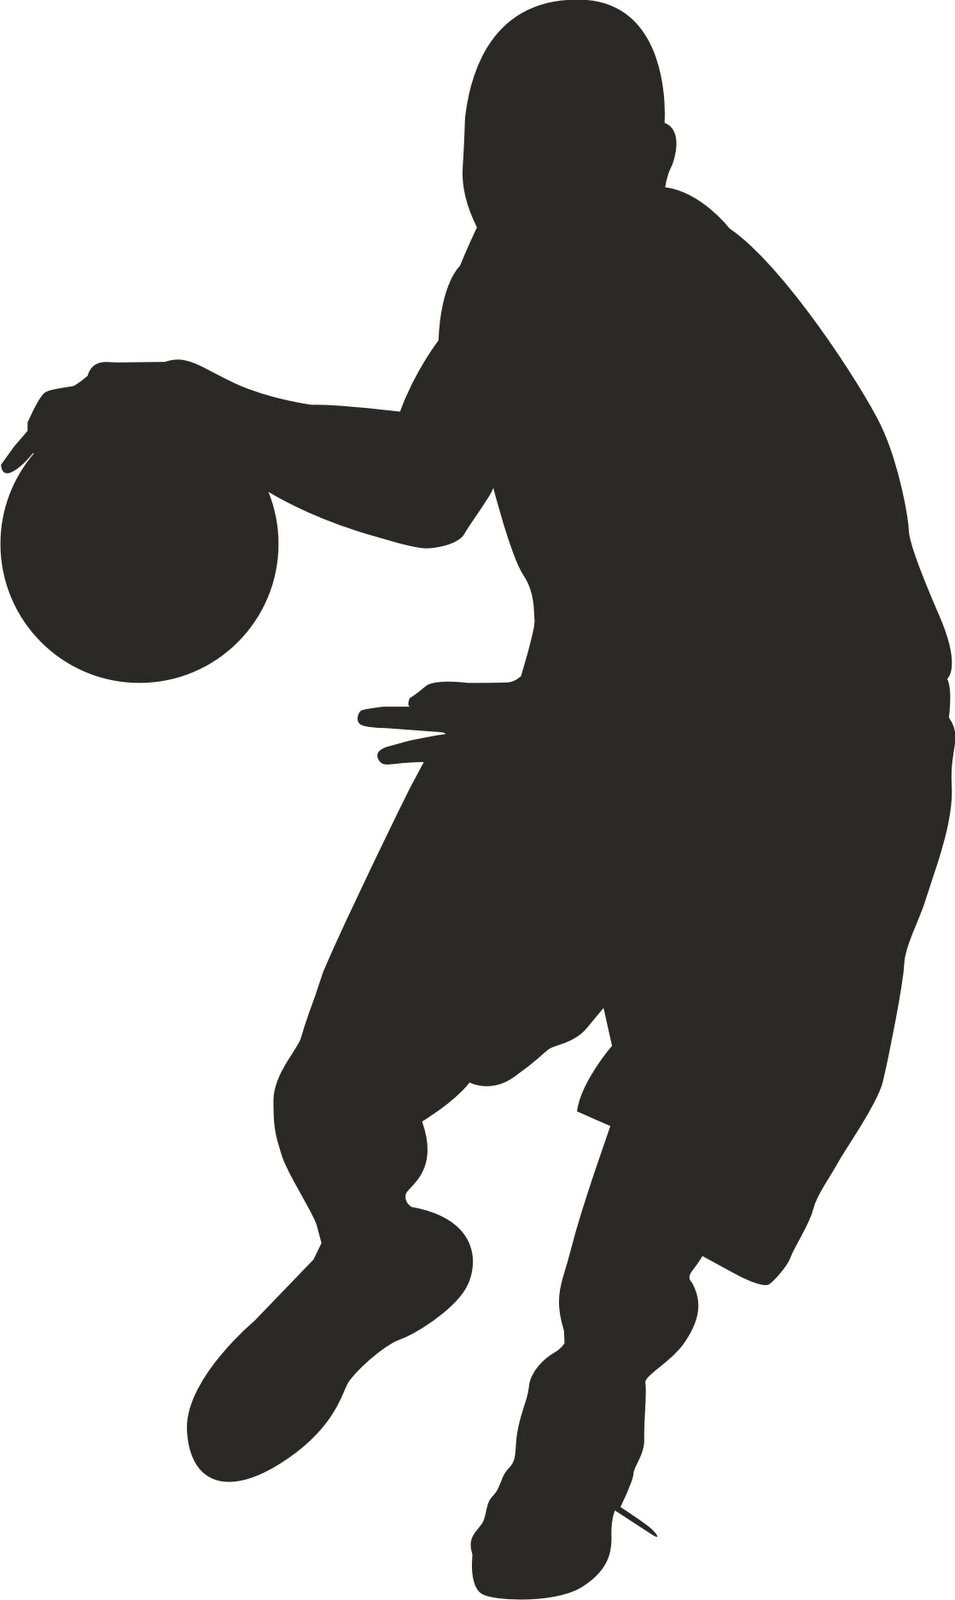 51+ Free Basketball Team Clipart